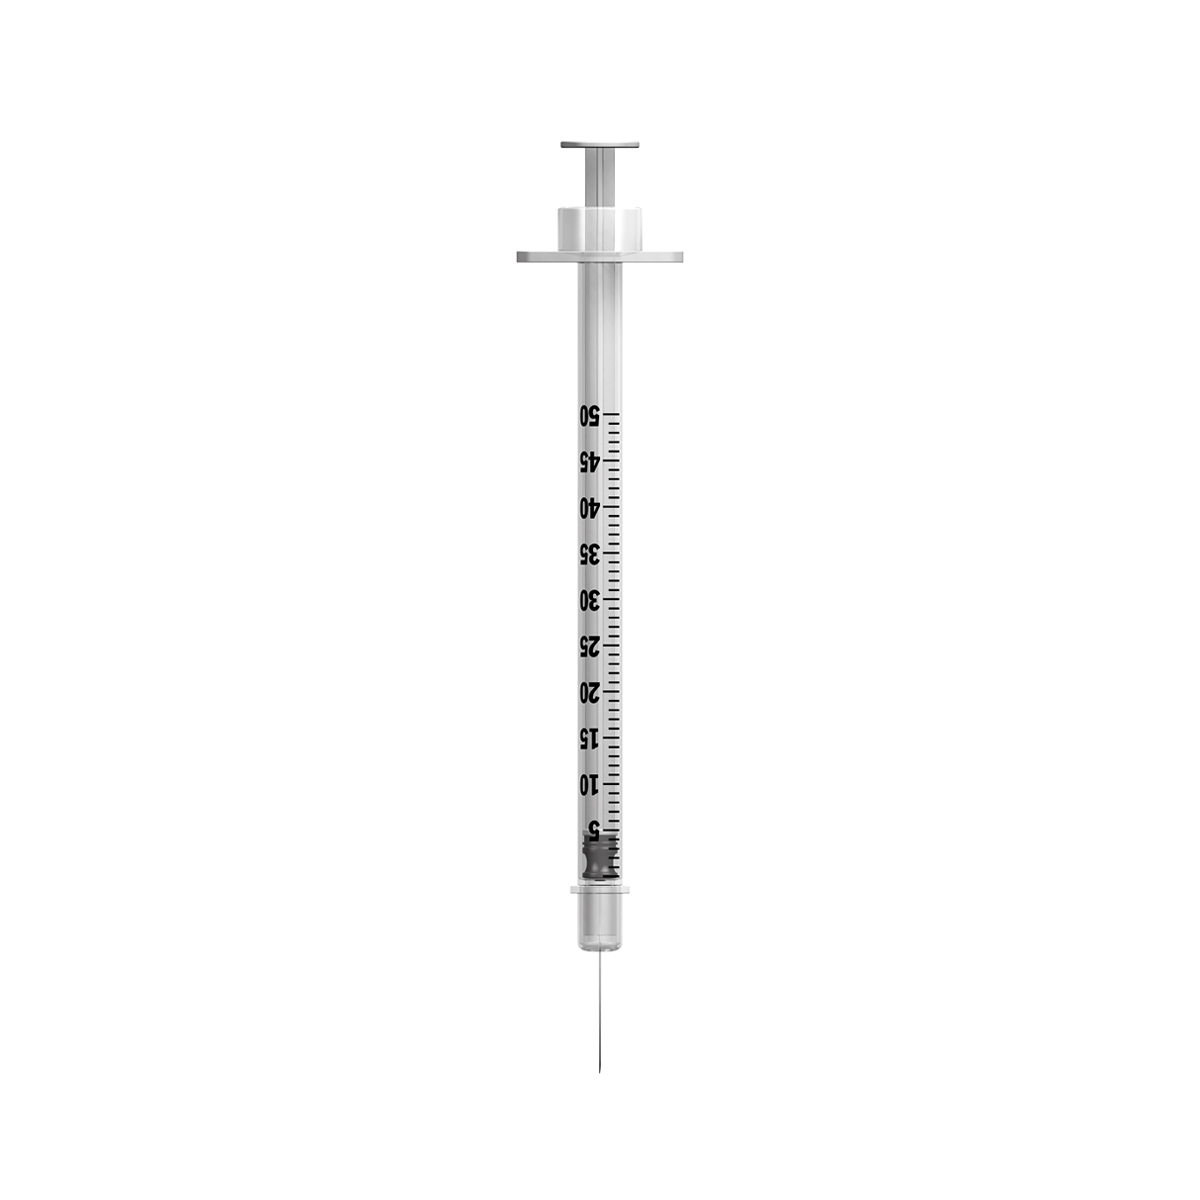 0.5ml 29G 12mm (½ inch) BD Micro-fine insulin syringe (boxed in 200) 